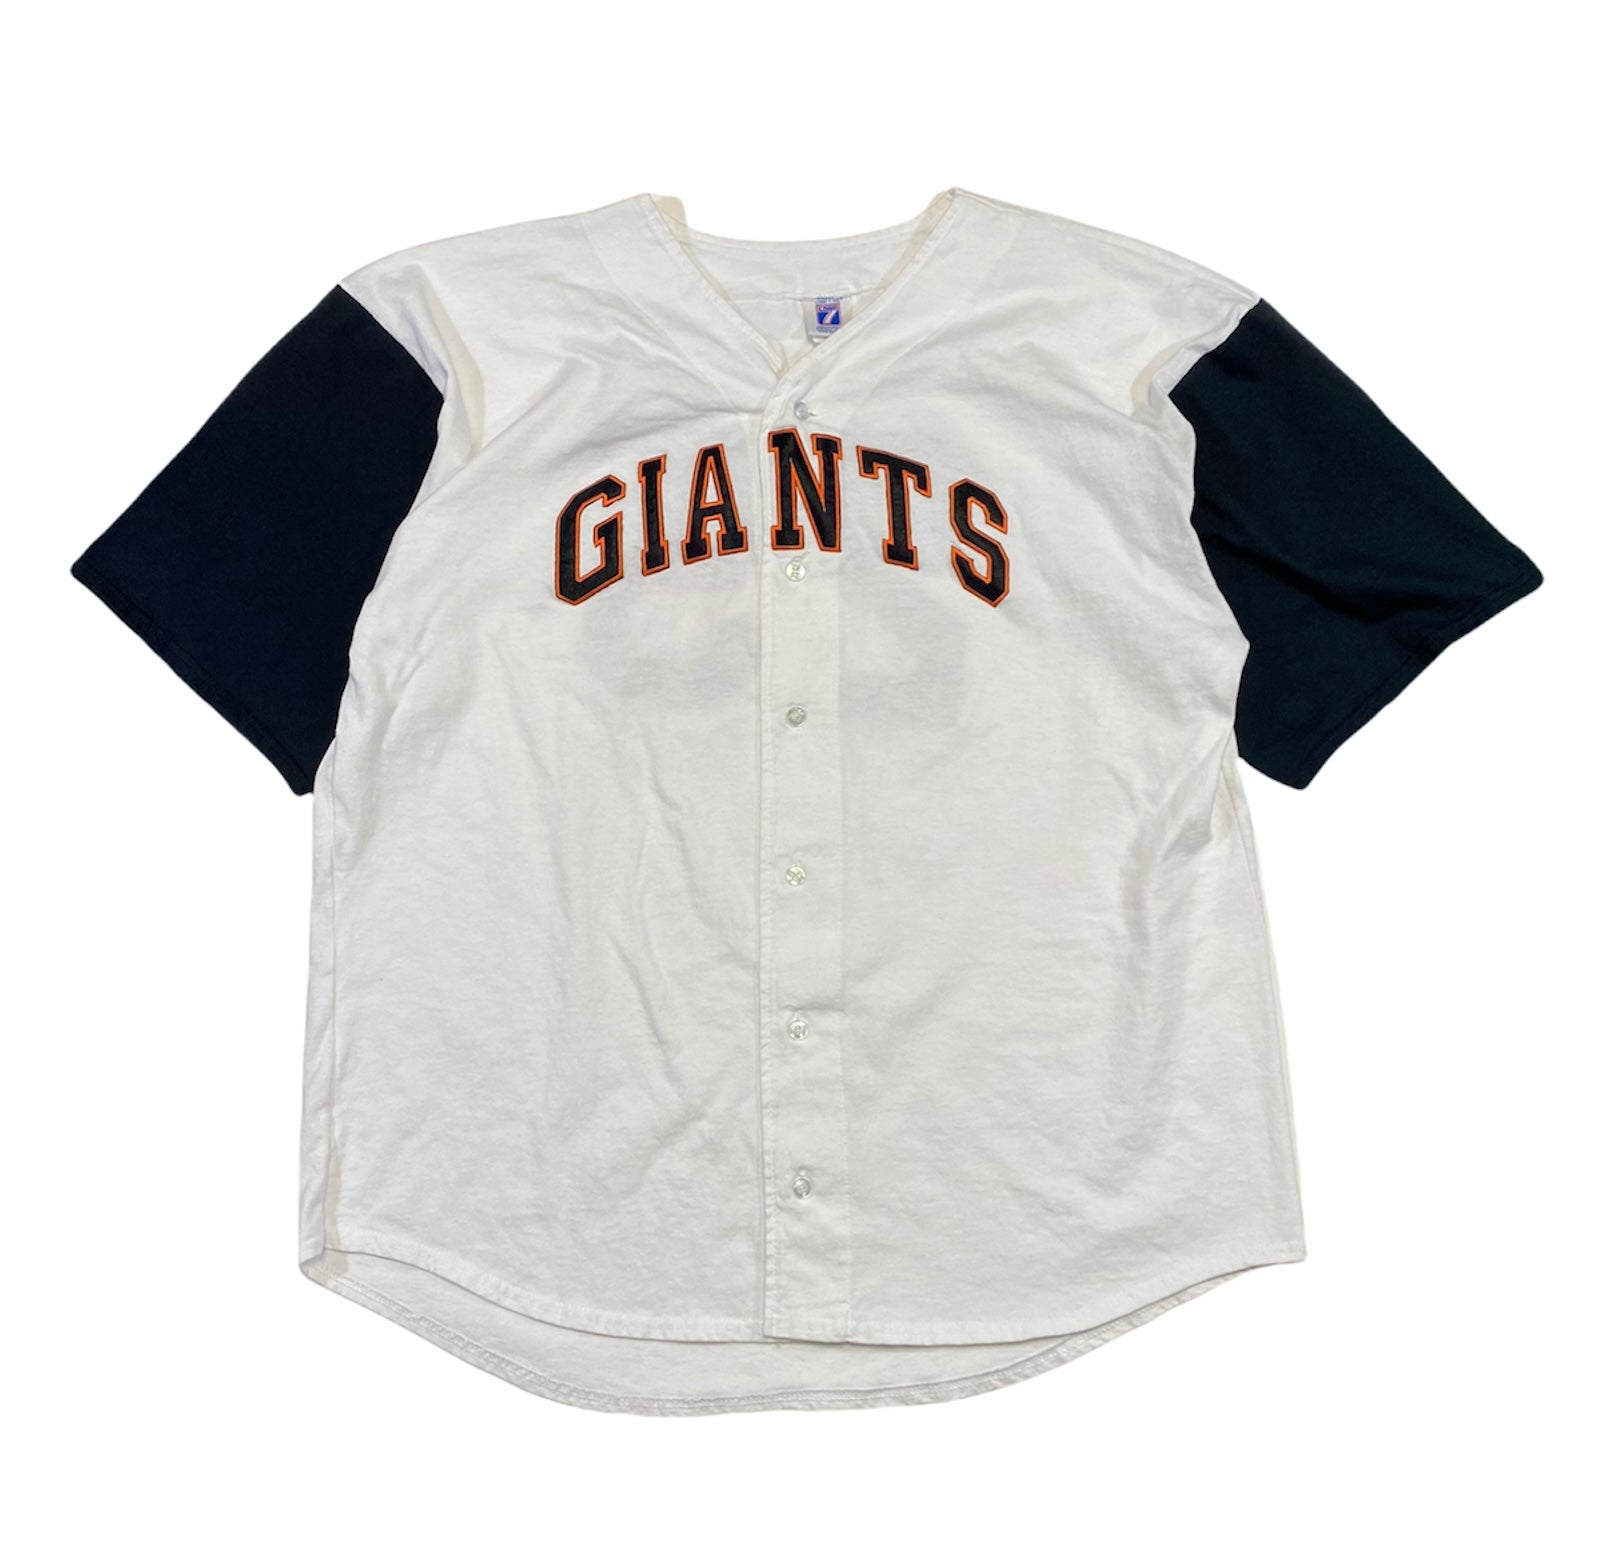 San Francisco Giants - Cheap MLB Baseball Jerseys